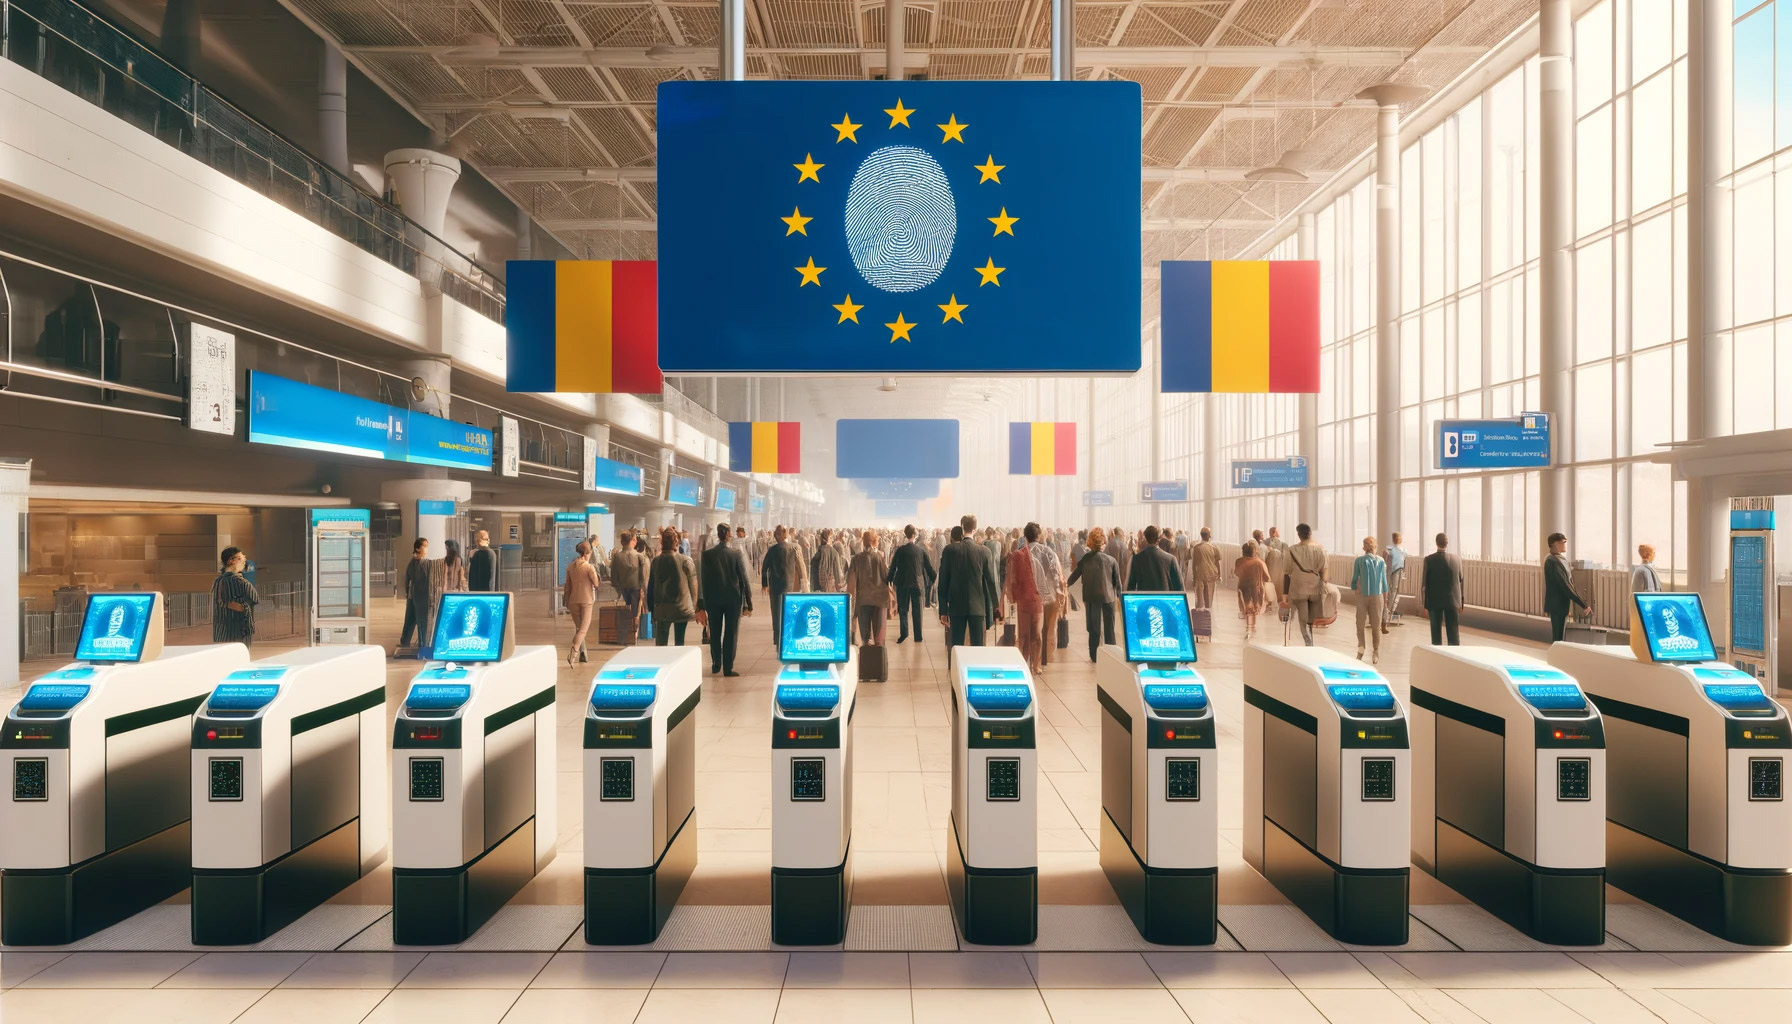 AI Generated Image of EU Fingerprint Scanners